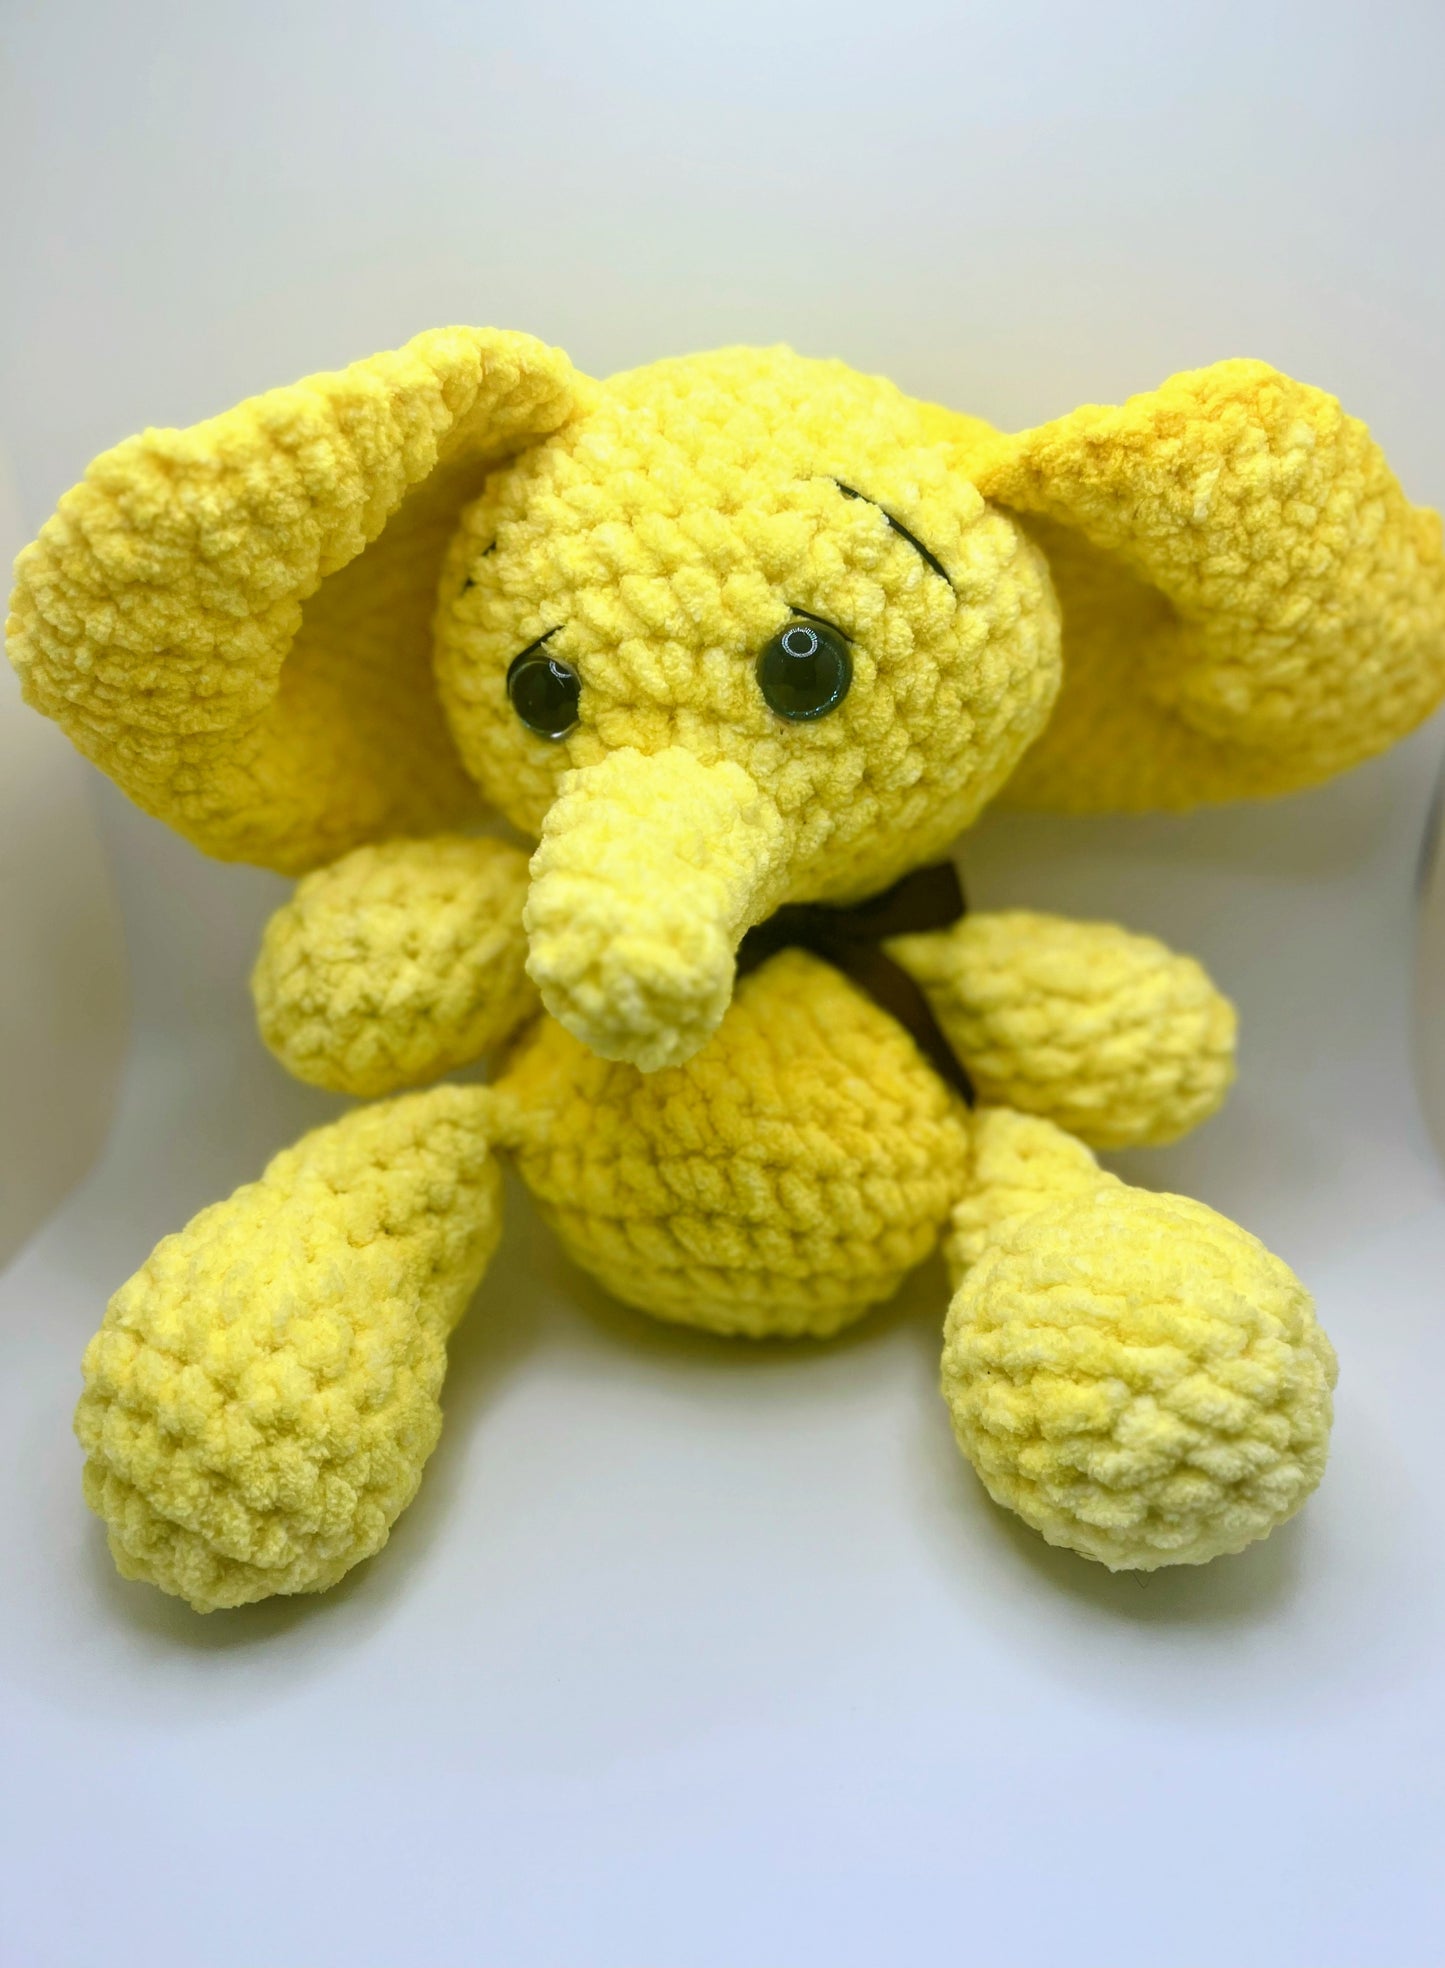 Stuffed Cute Elephant 🐘 Toy - Crochet Knitted Amigurumi Toy